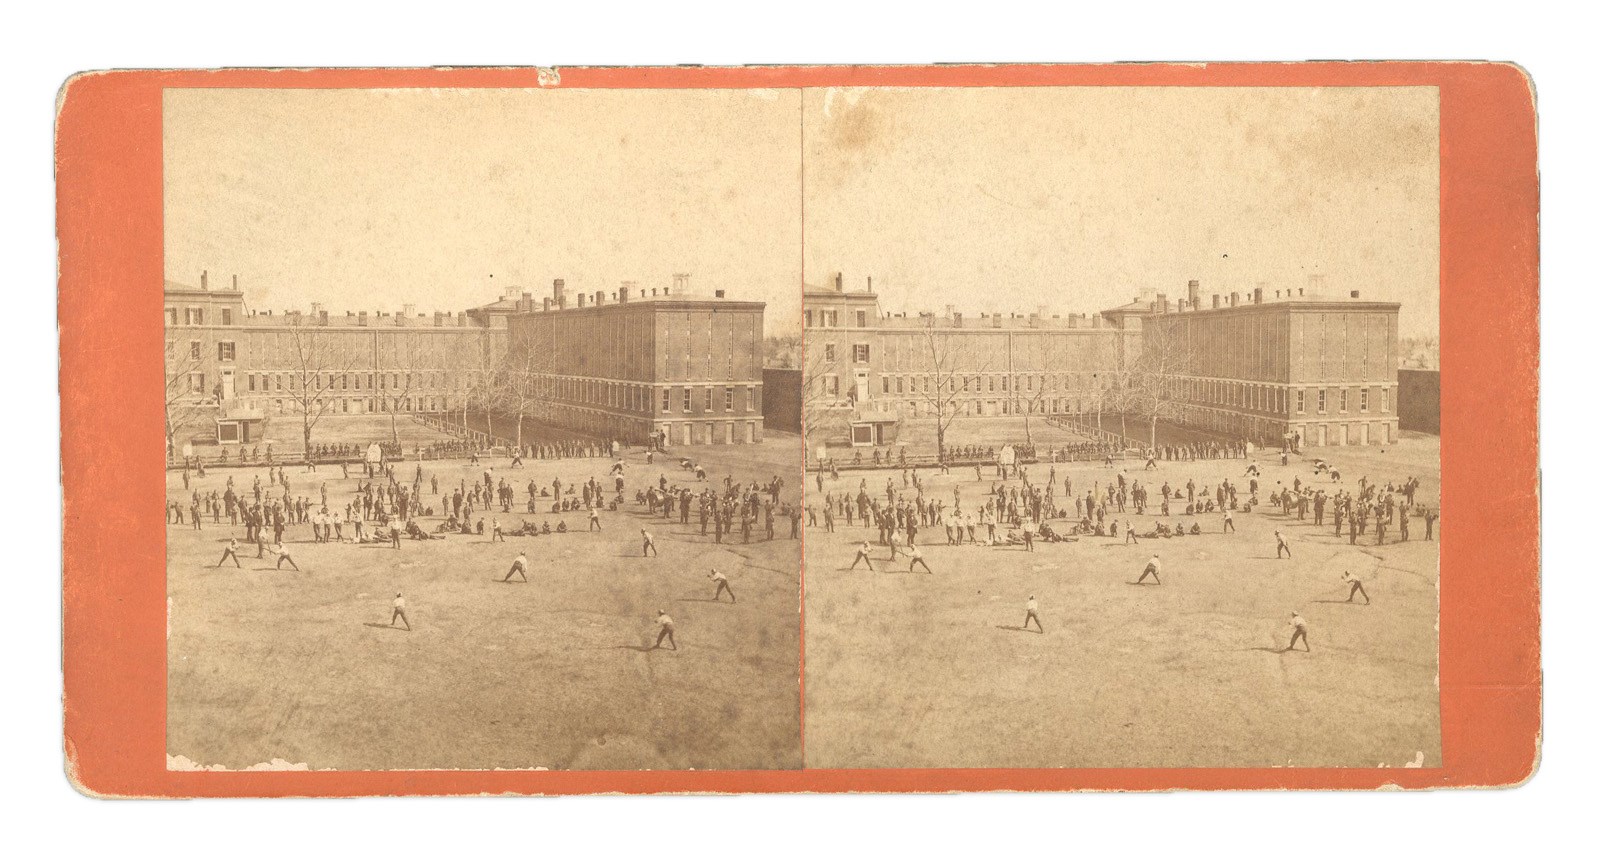 Negro League, Latin, Japanese & International Base - 1880s Negro League Prison Baseball Game Stereocard